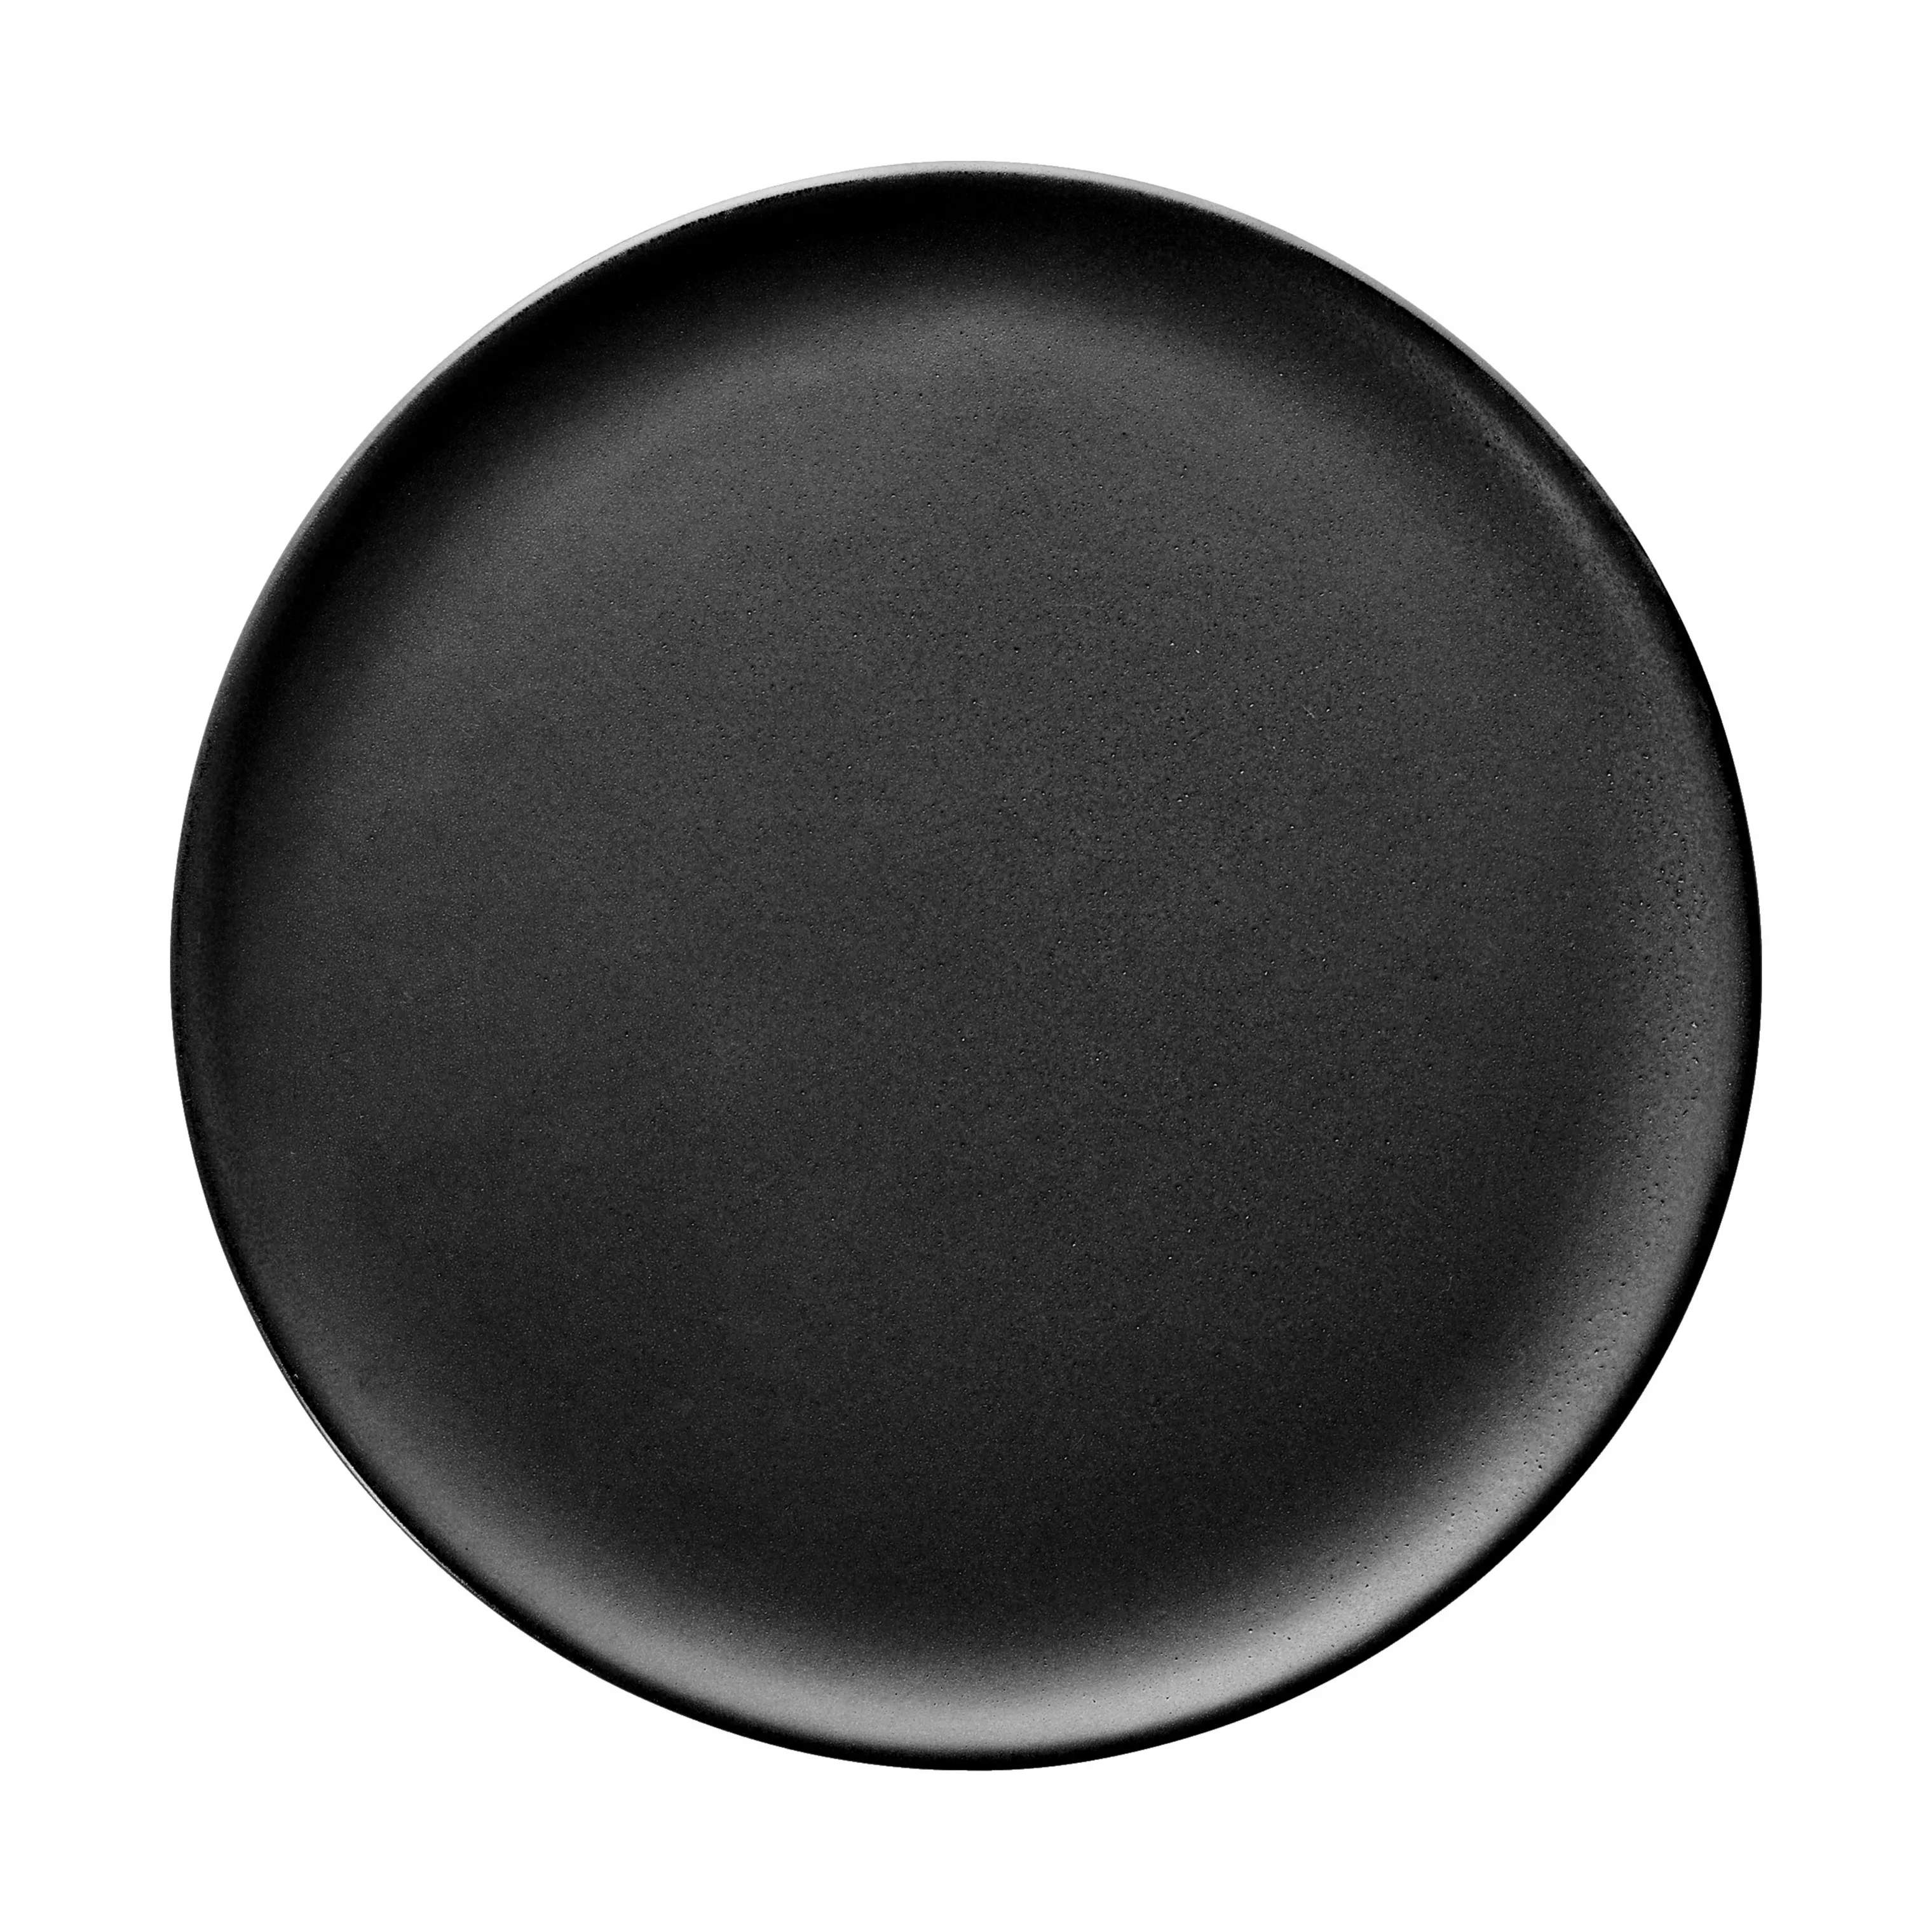 Middagstallerken, titanium black, large